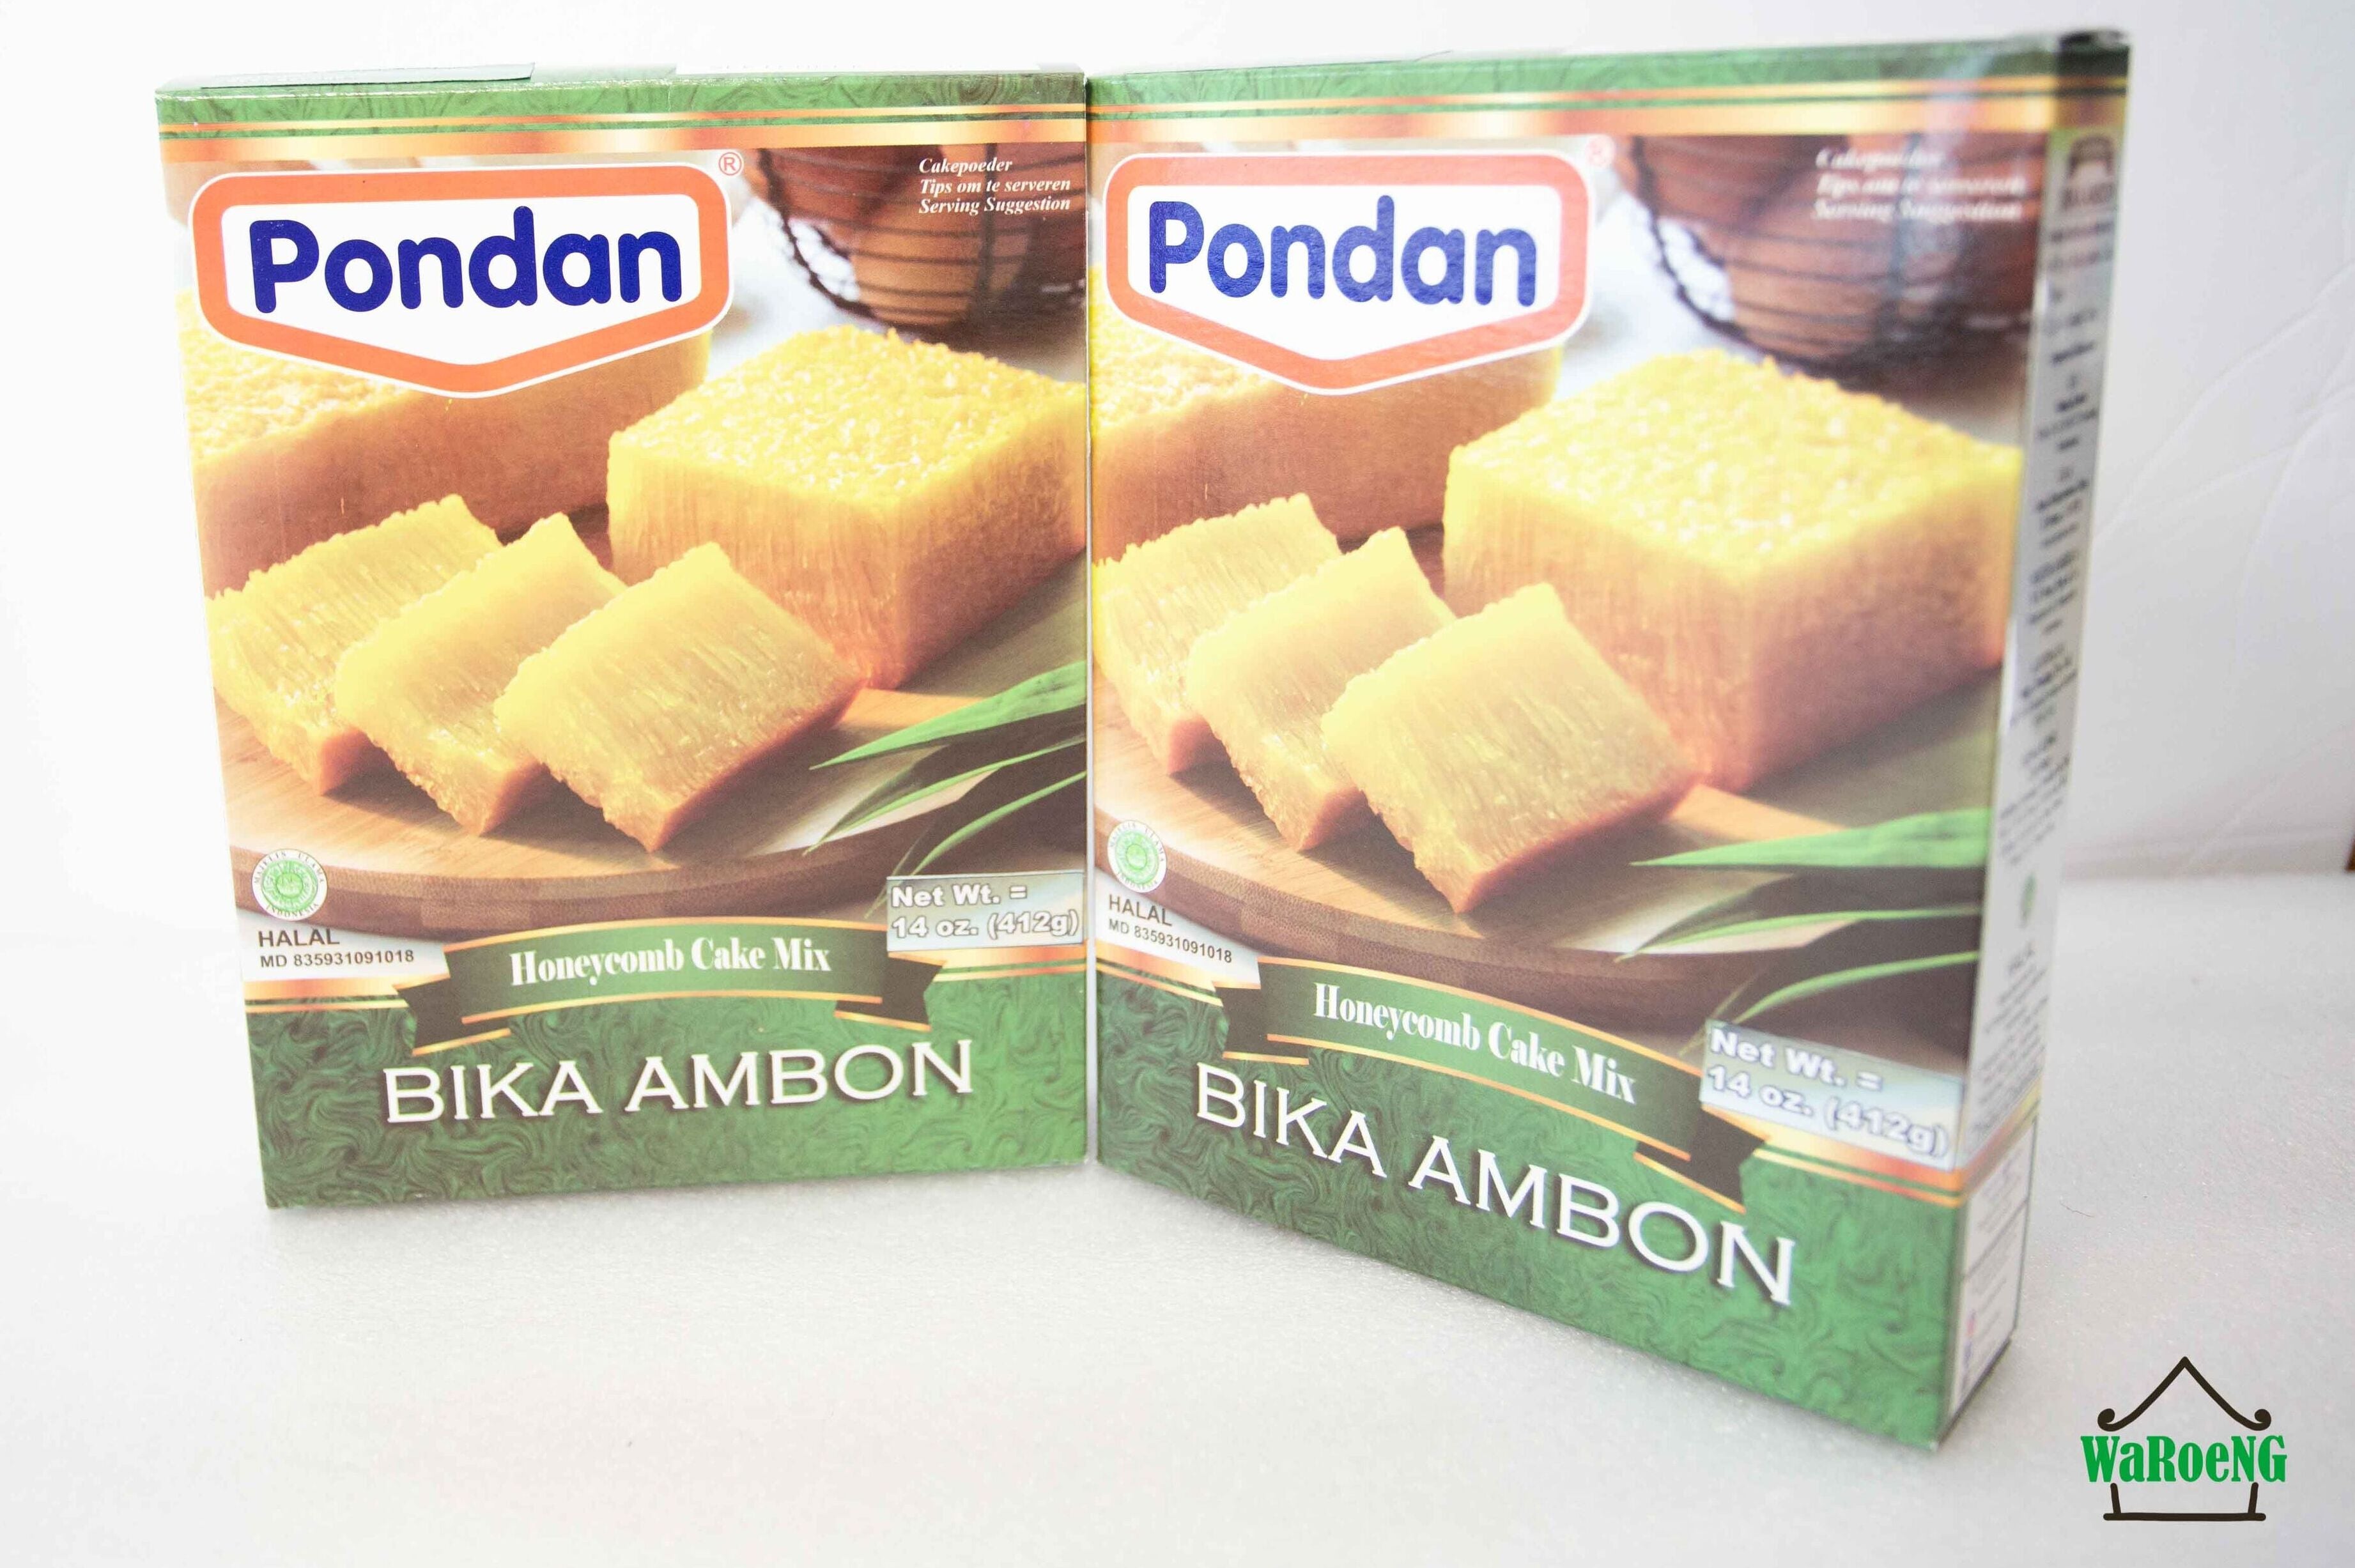 Pondan Bika Ambon (Honeycomb Cake Mix)